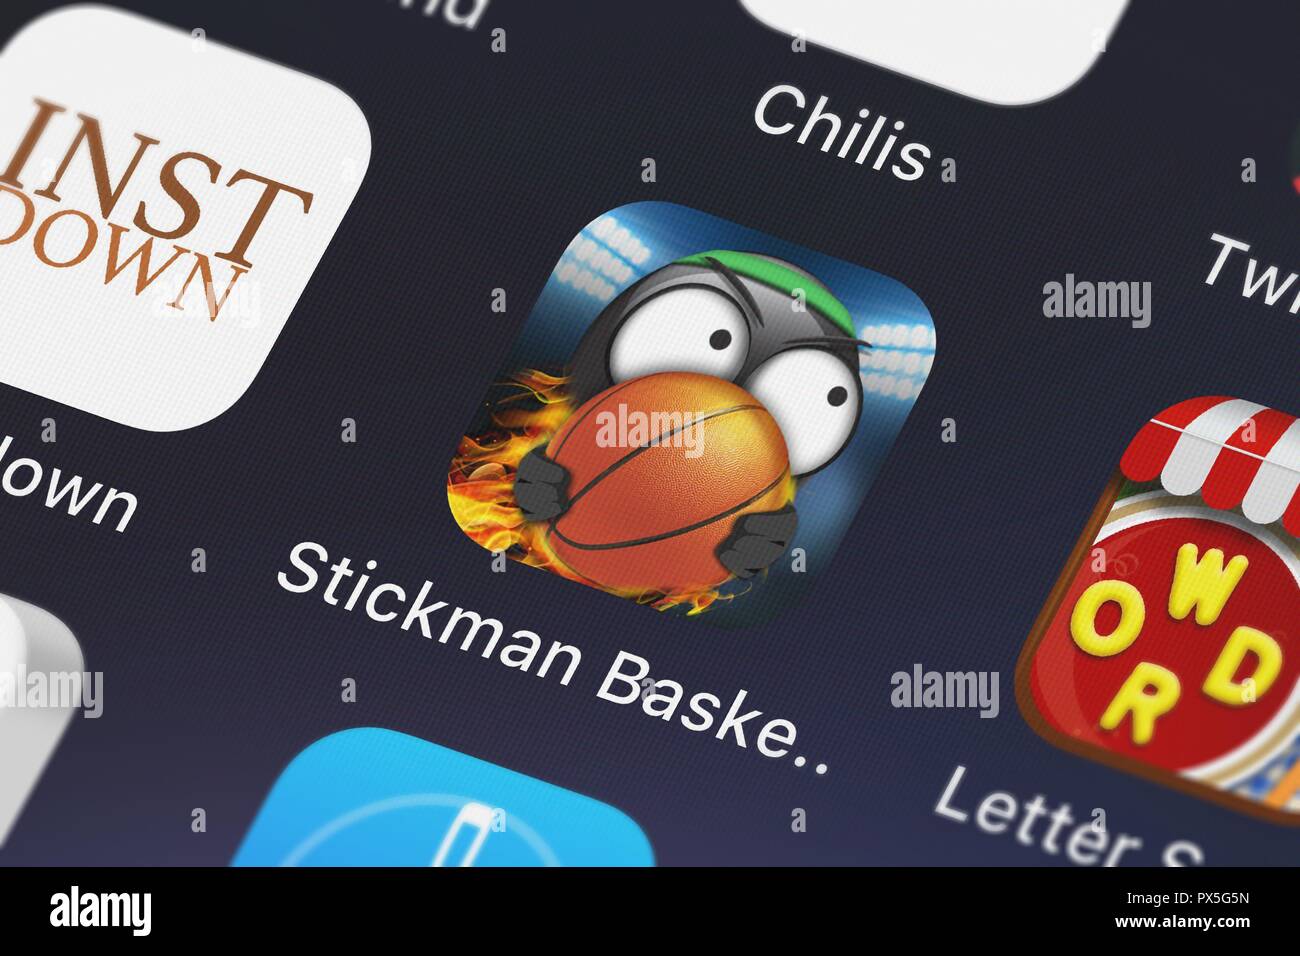 Stickman Base Jumper on the App Store